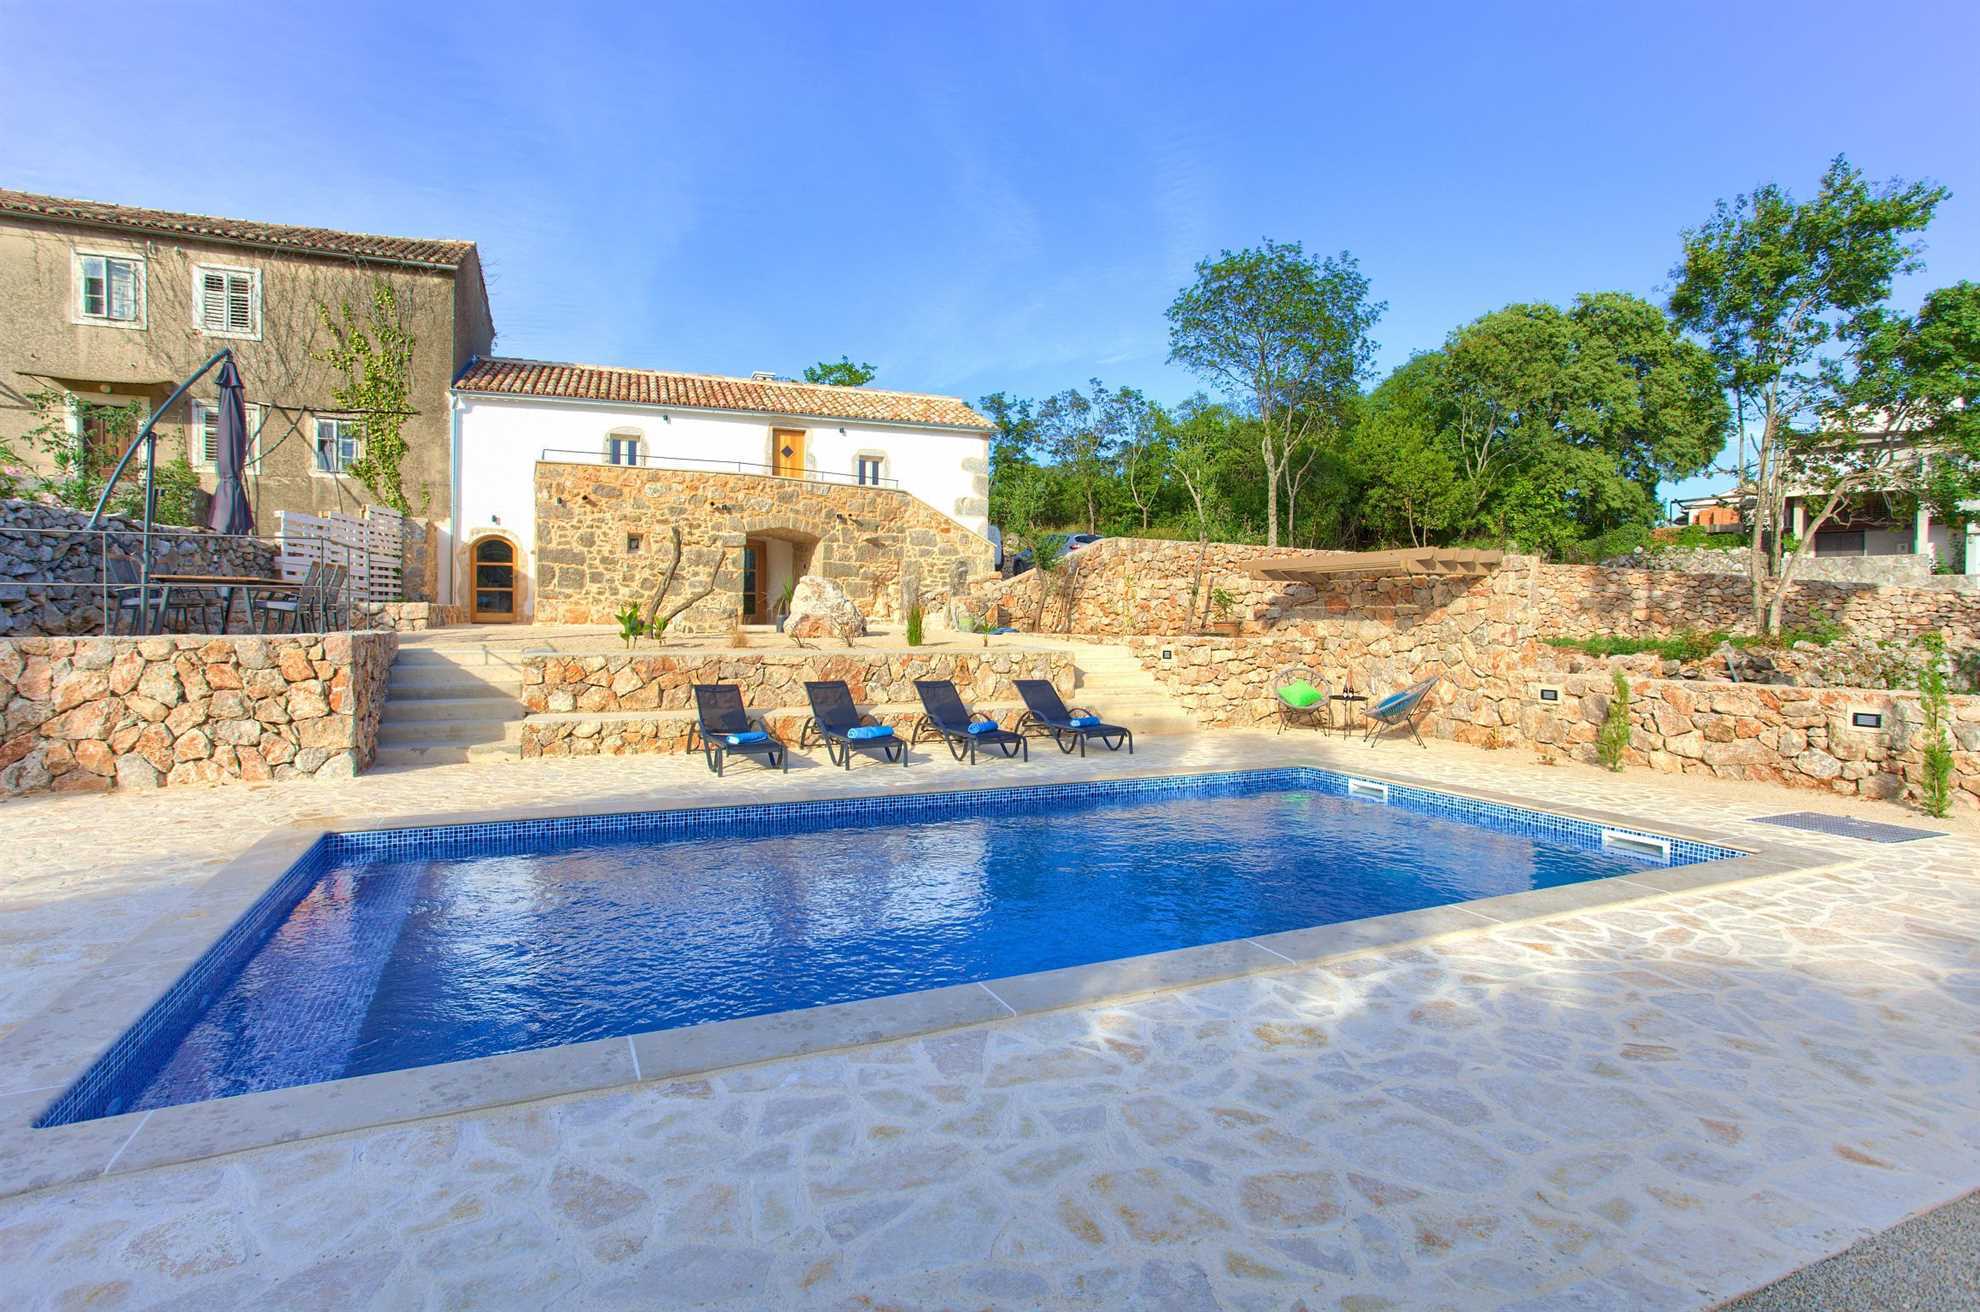 Villa May with a swimming pool.